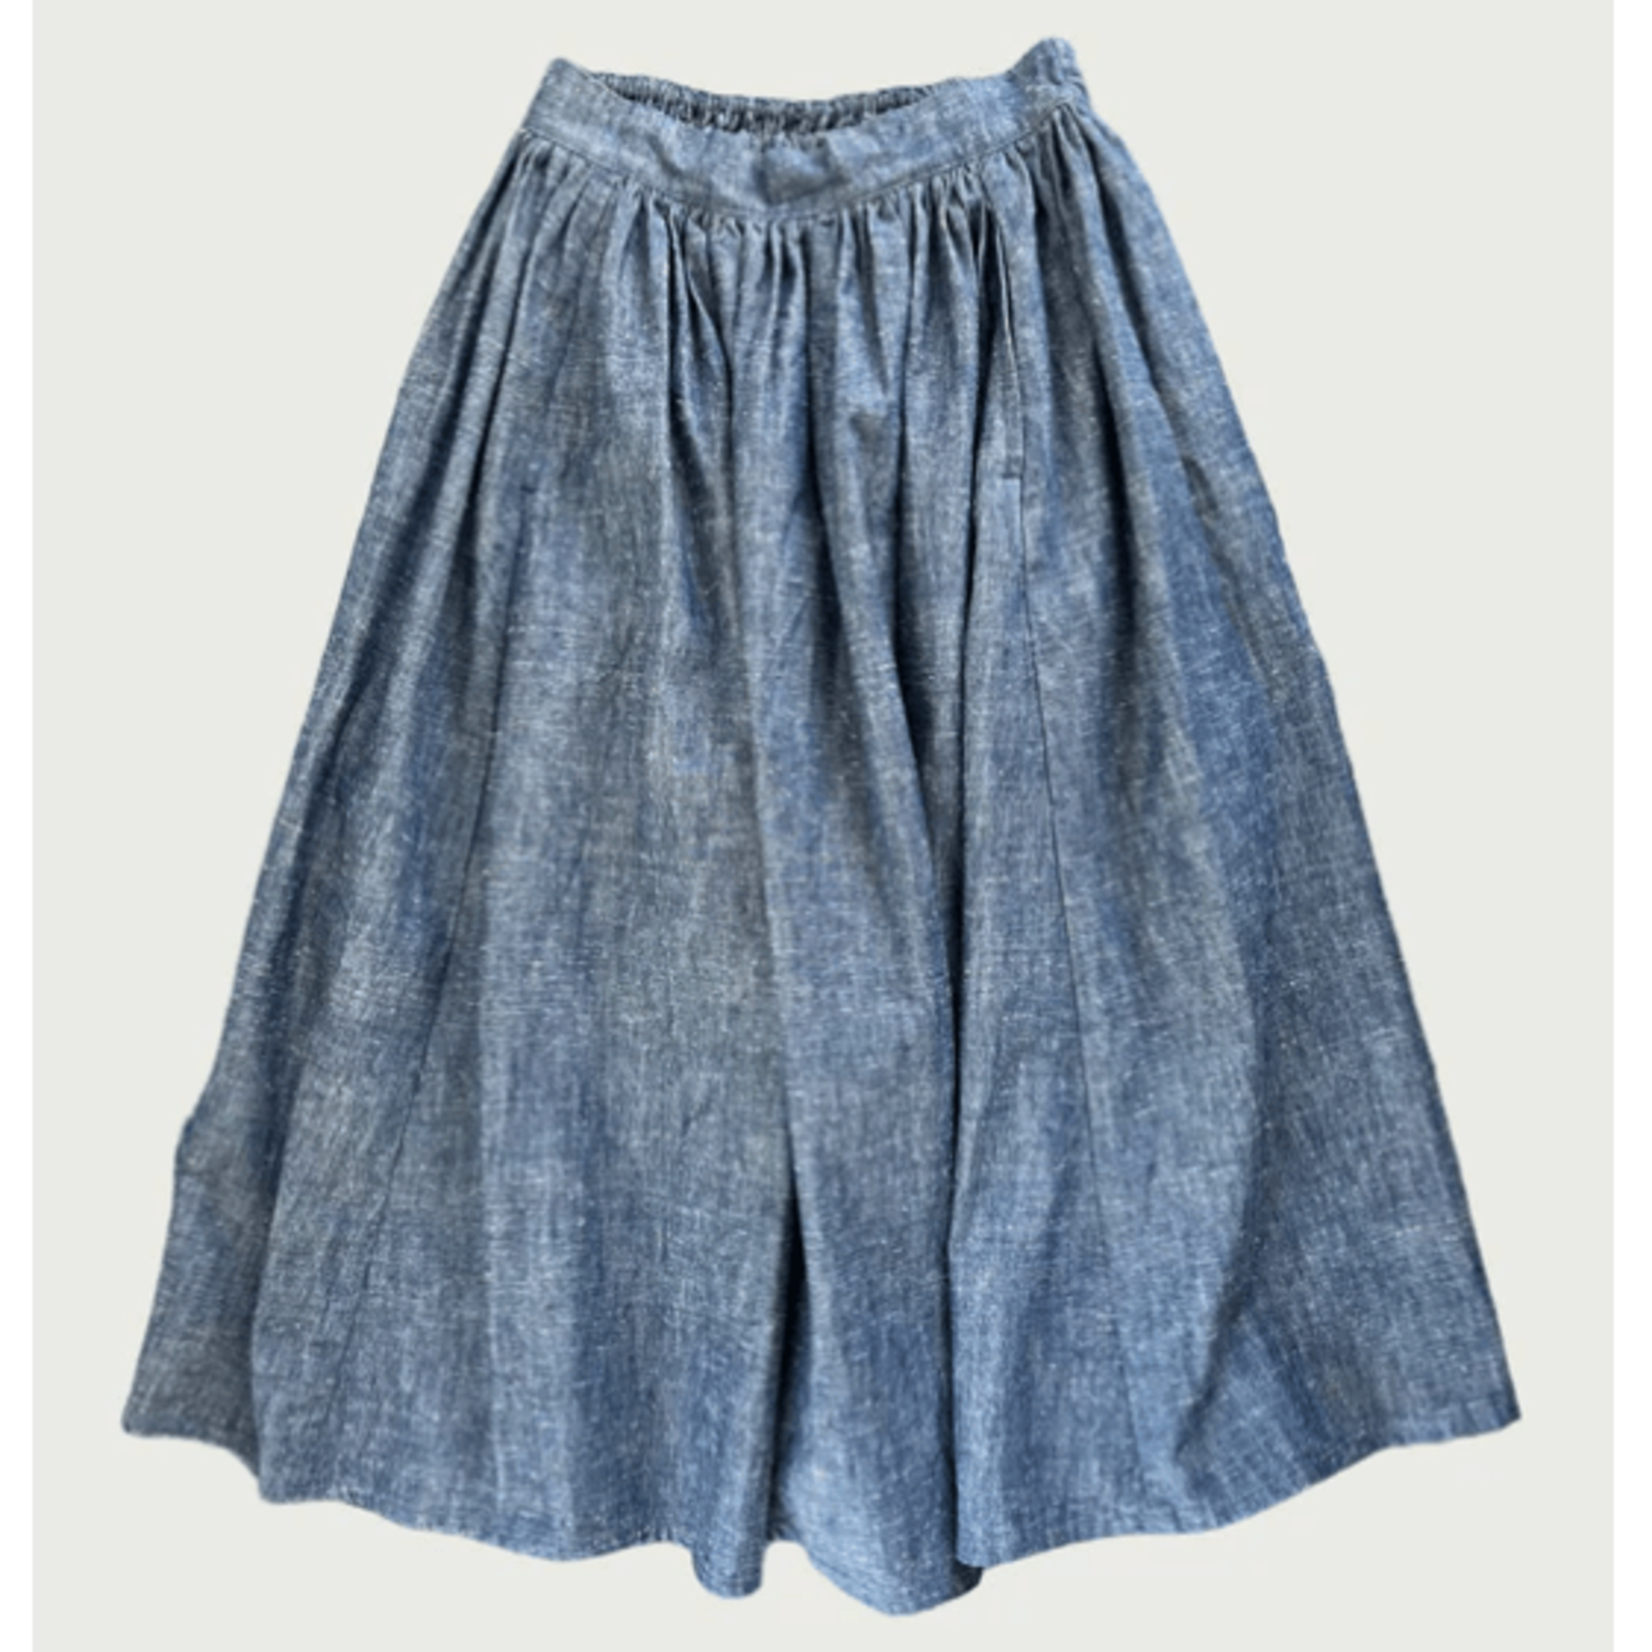 Indigo Skirt (medium)